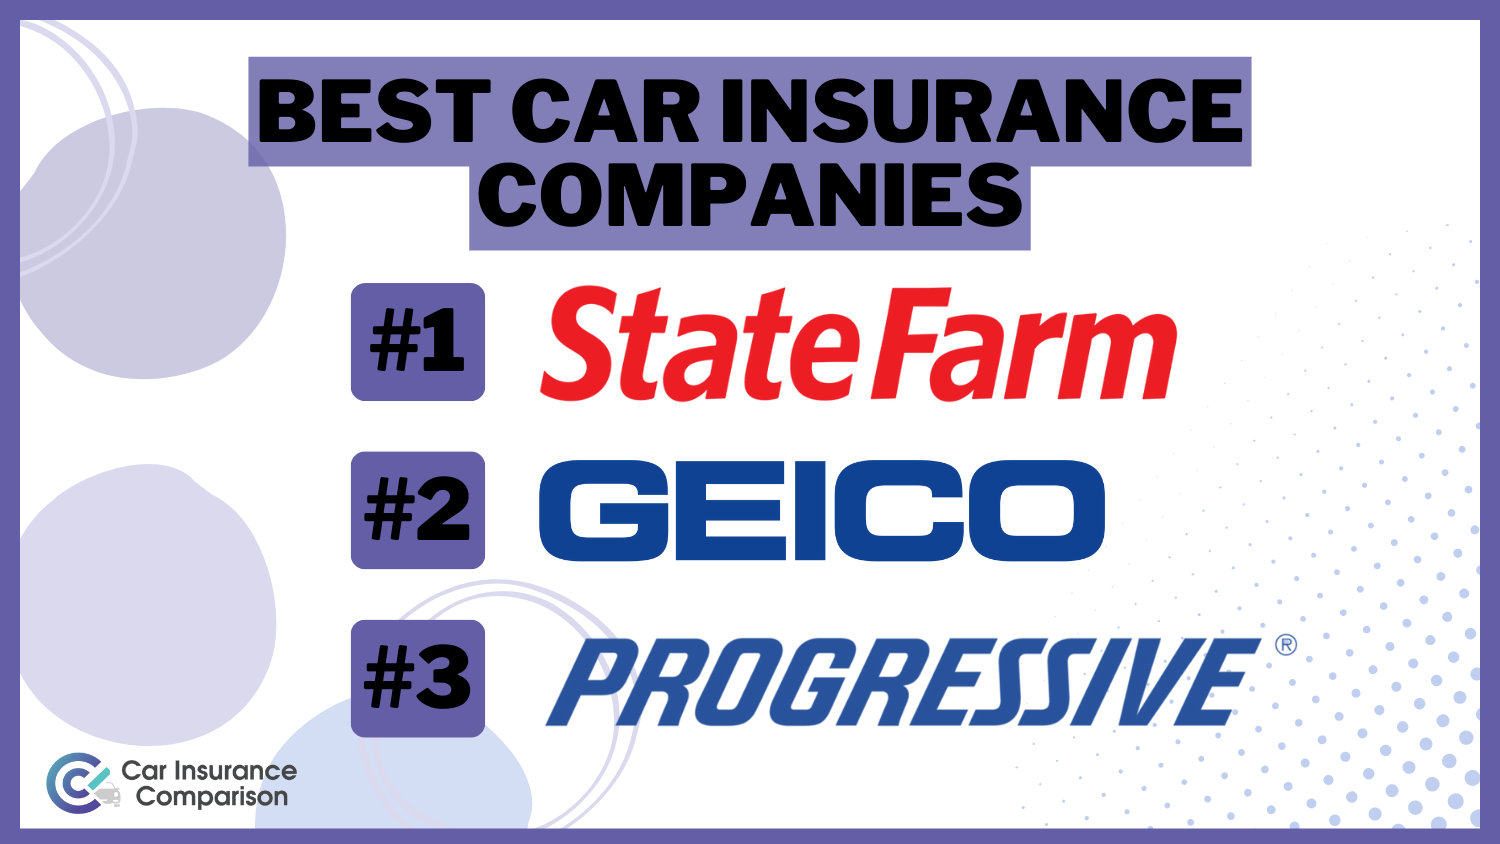 Best Car Insurance Companies: State Fram, Geico, and Progressive